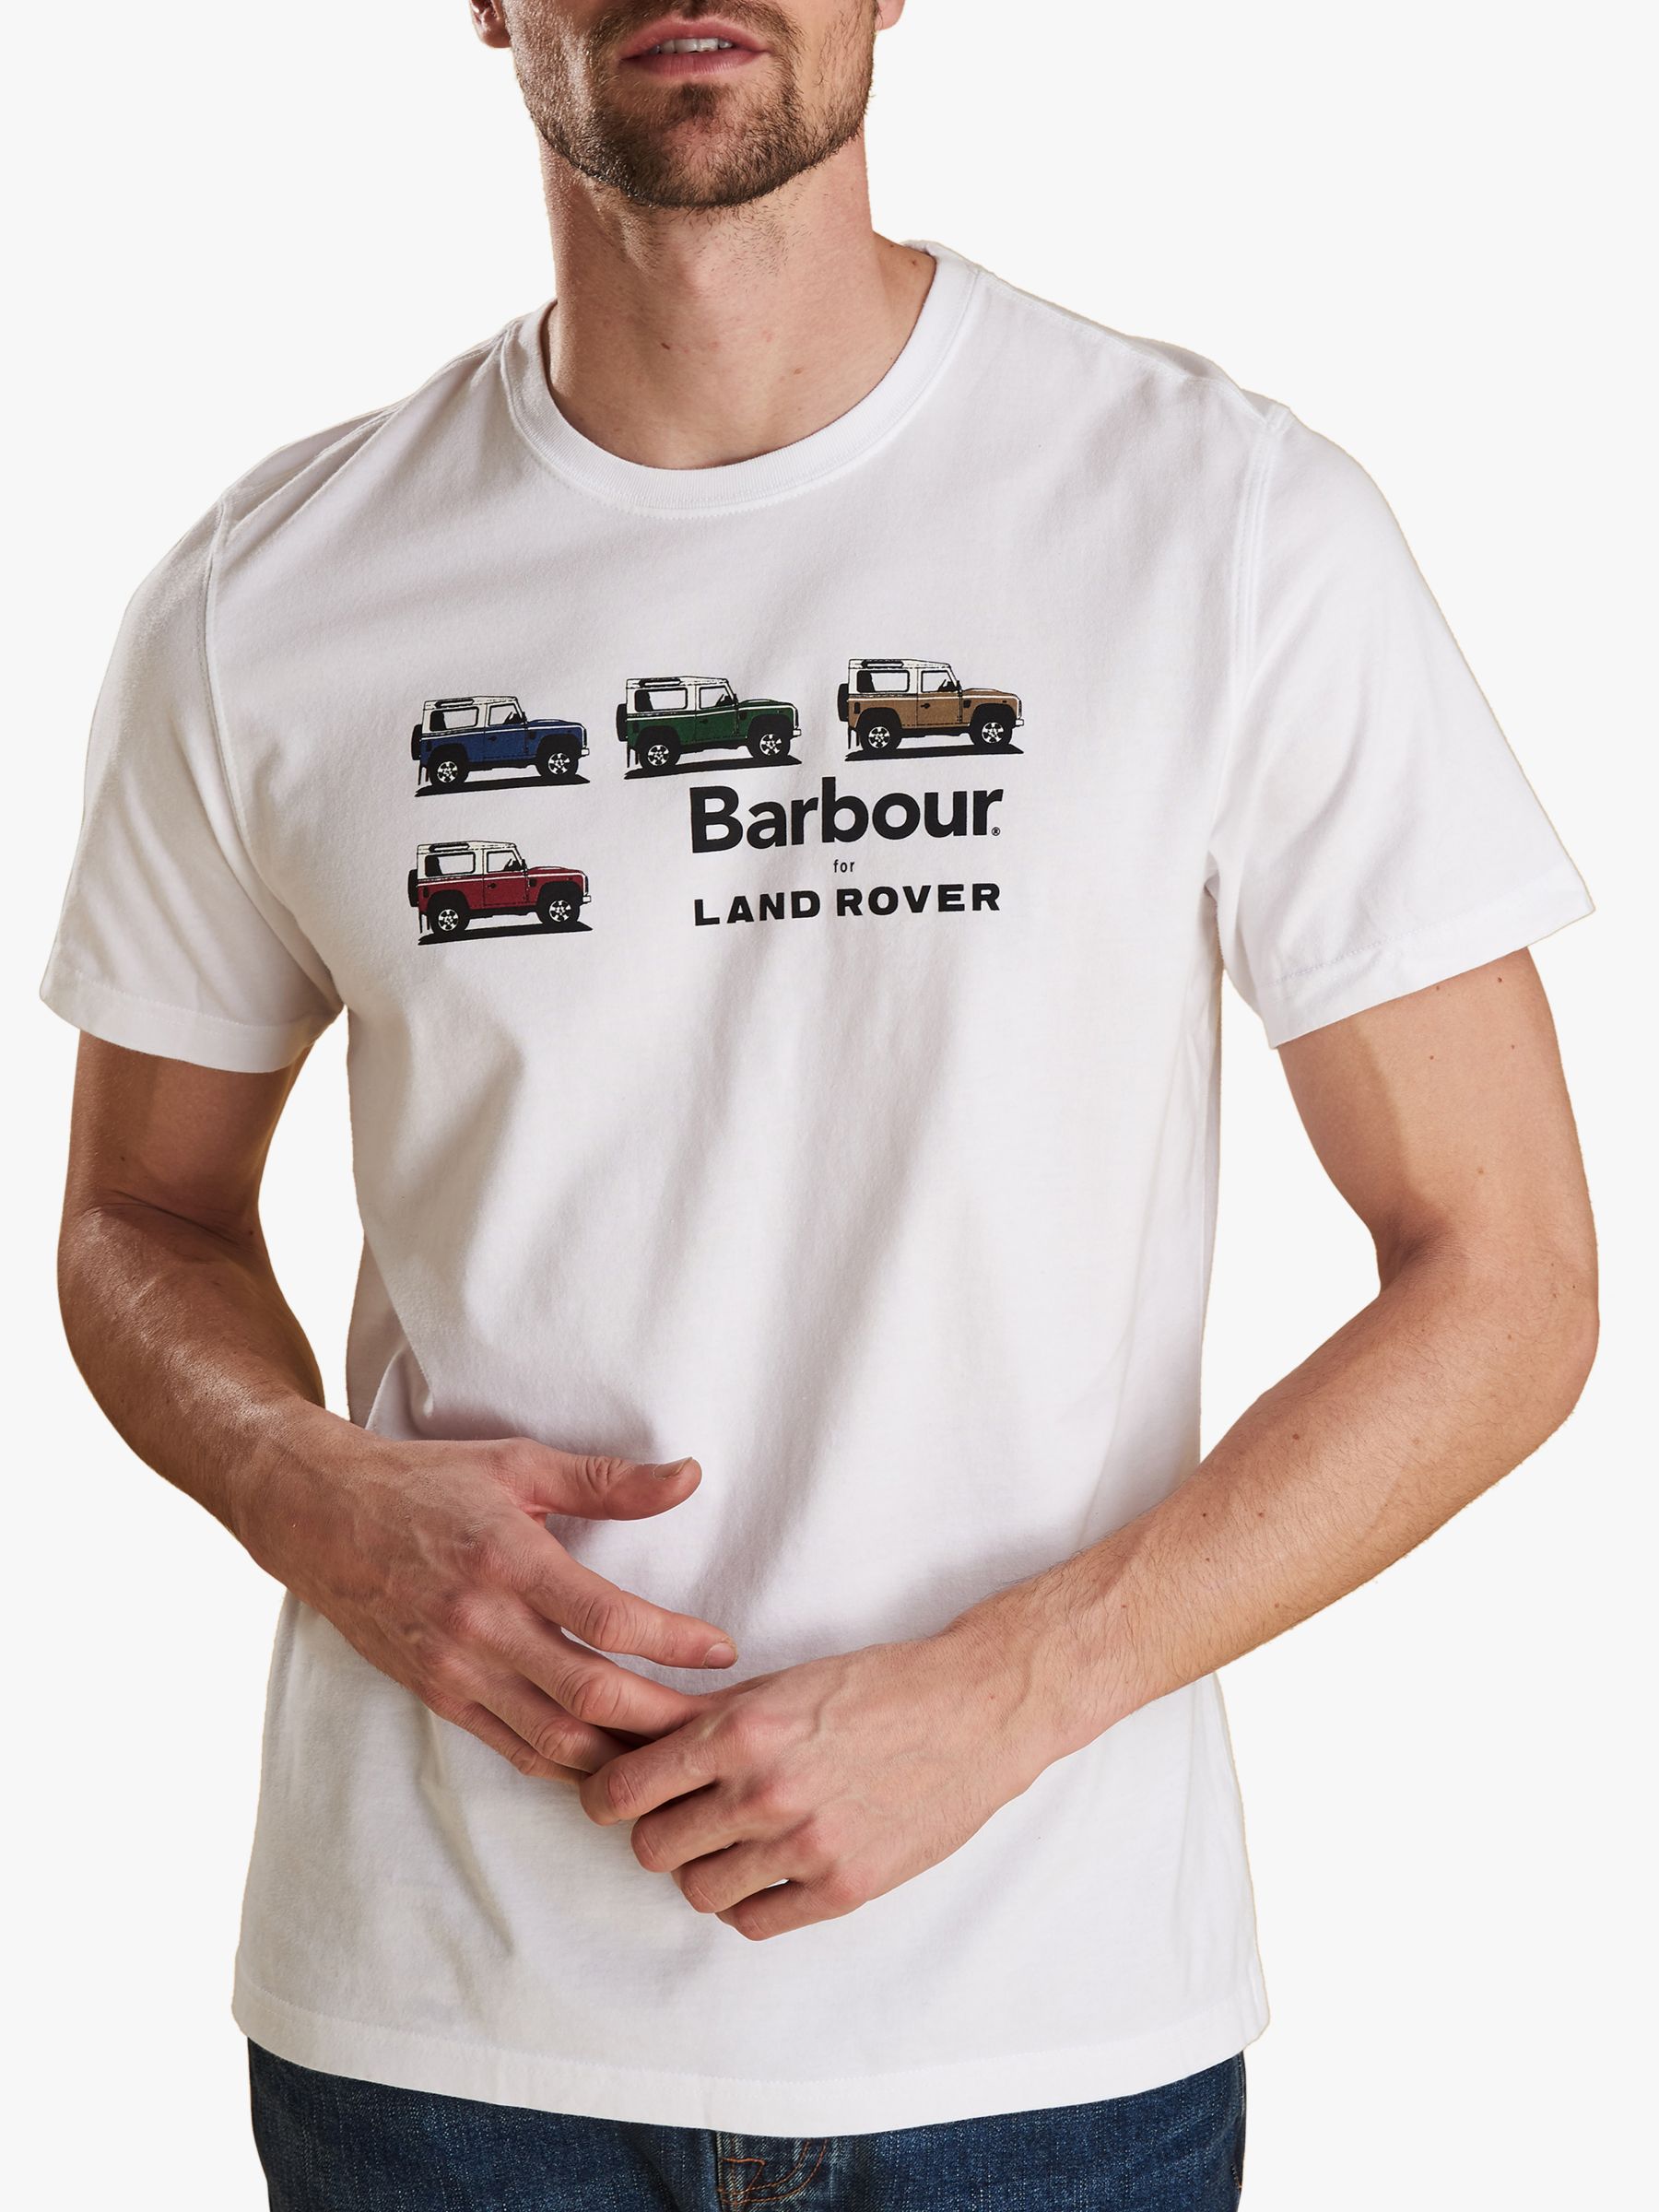 john lewis barbour t shirt Online 